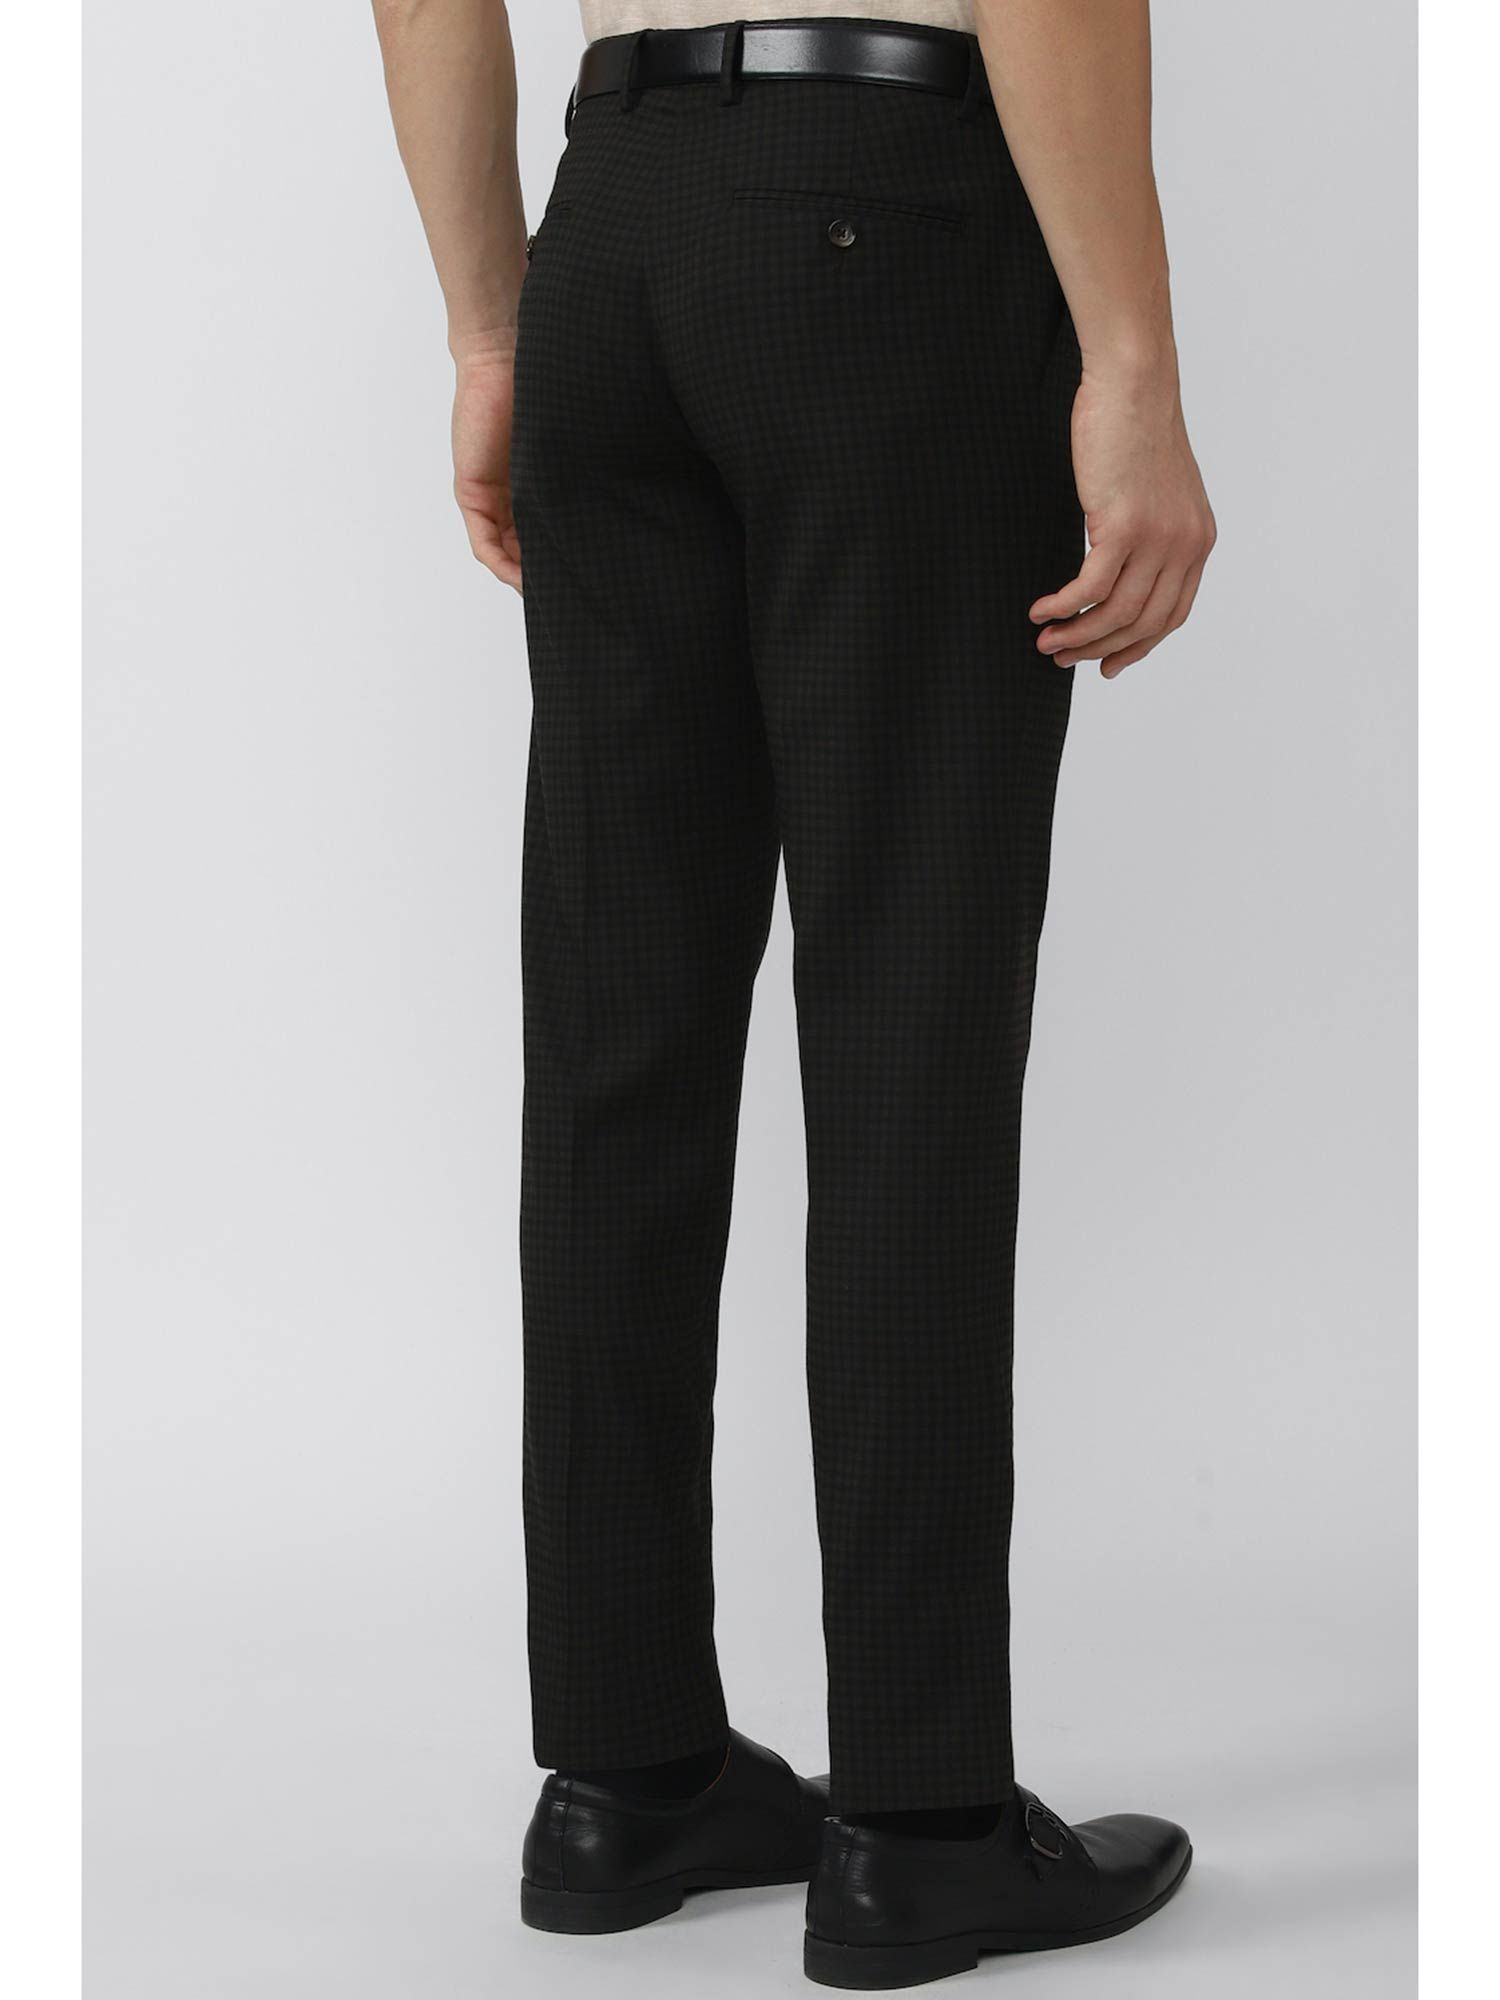 Buy Peter England Men Black Check Super Slim Fit Formal Trousers online